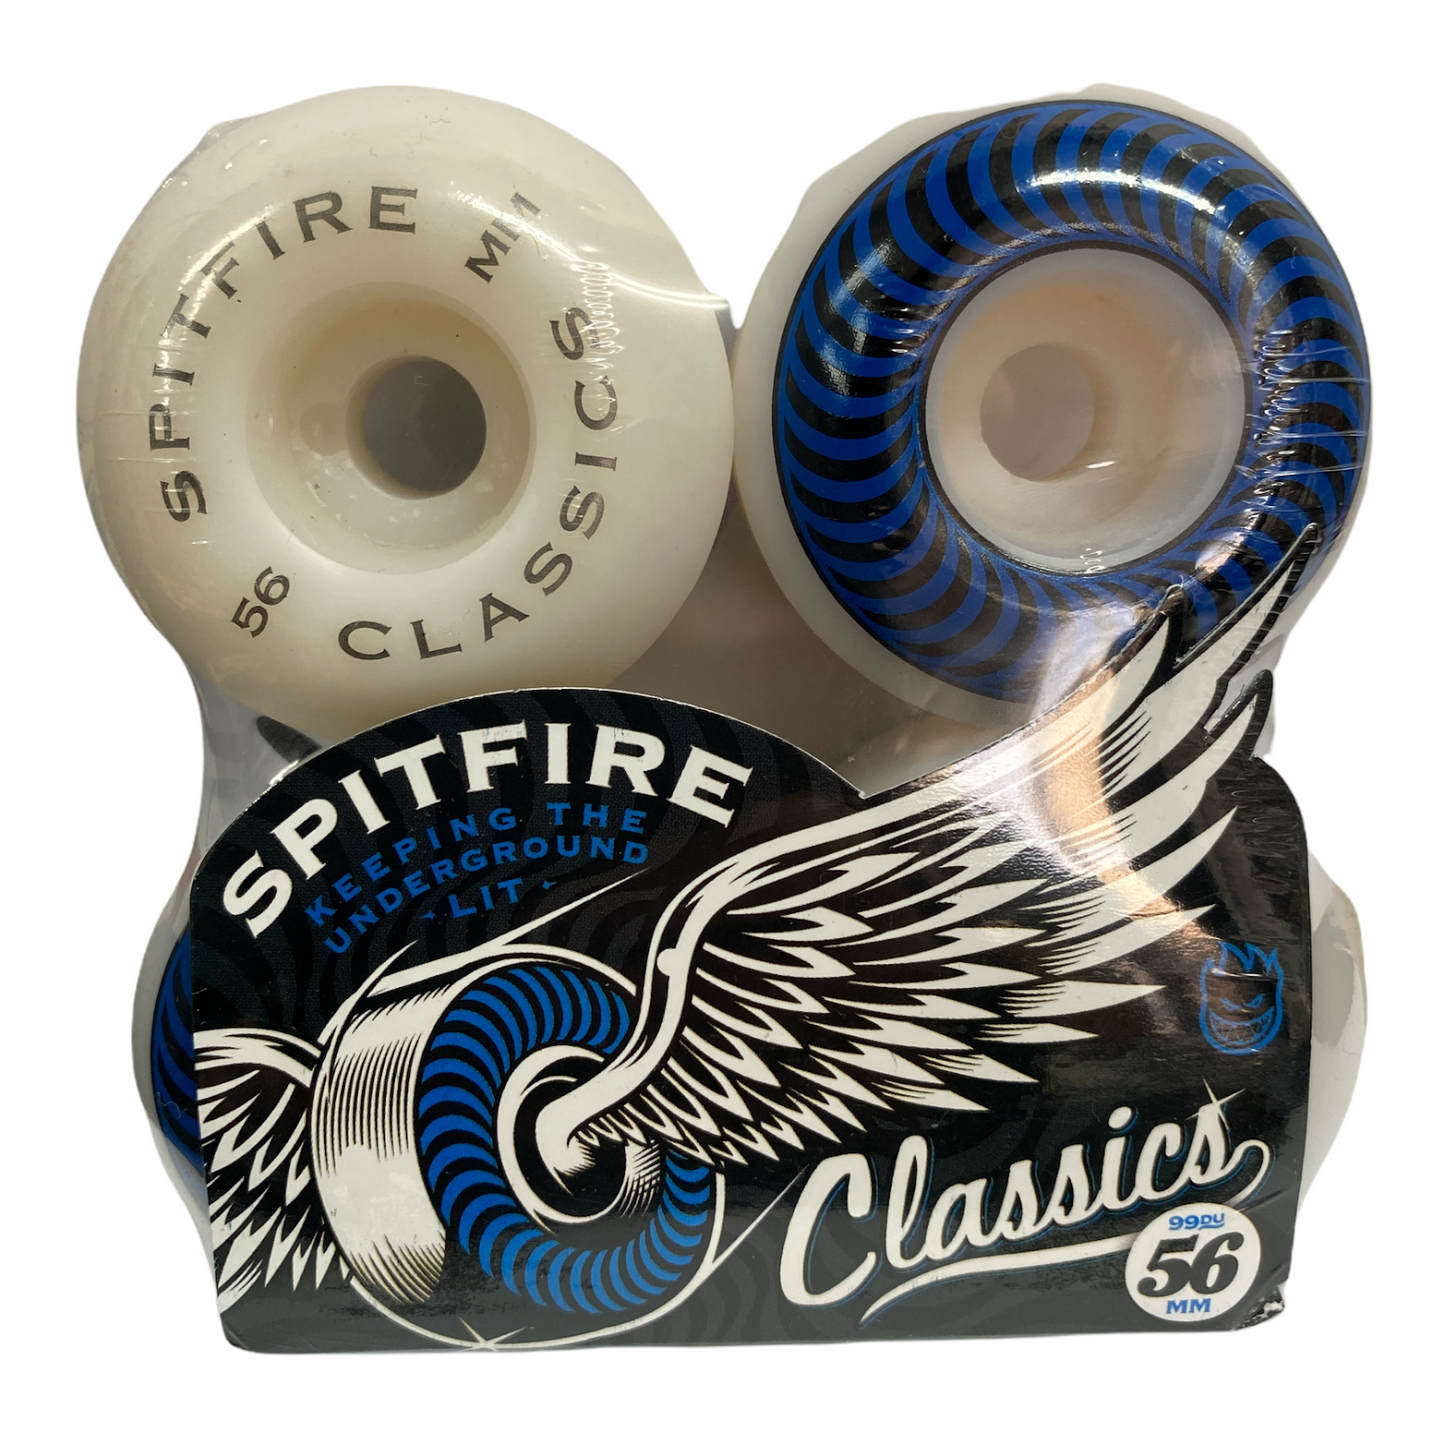 Spitfire Classic- 56mm